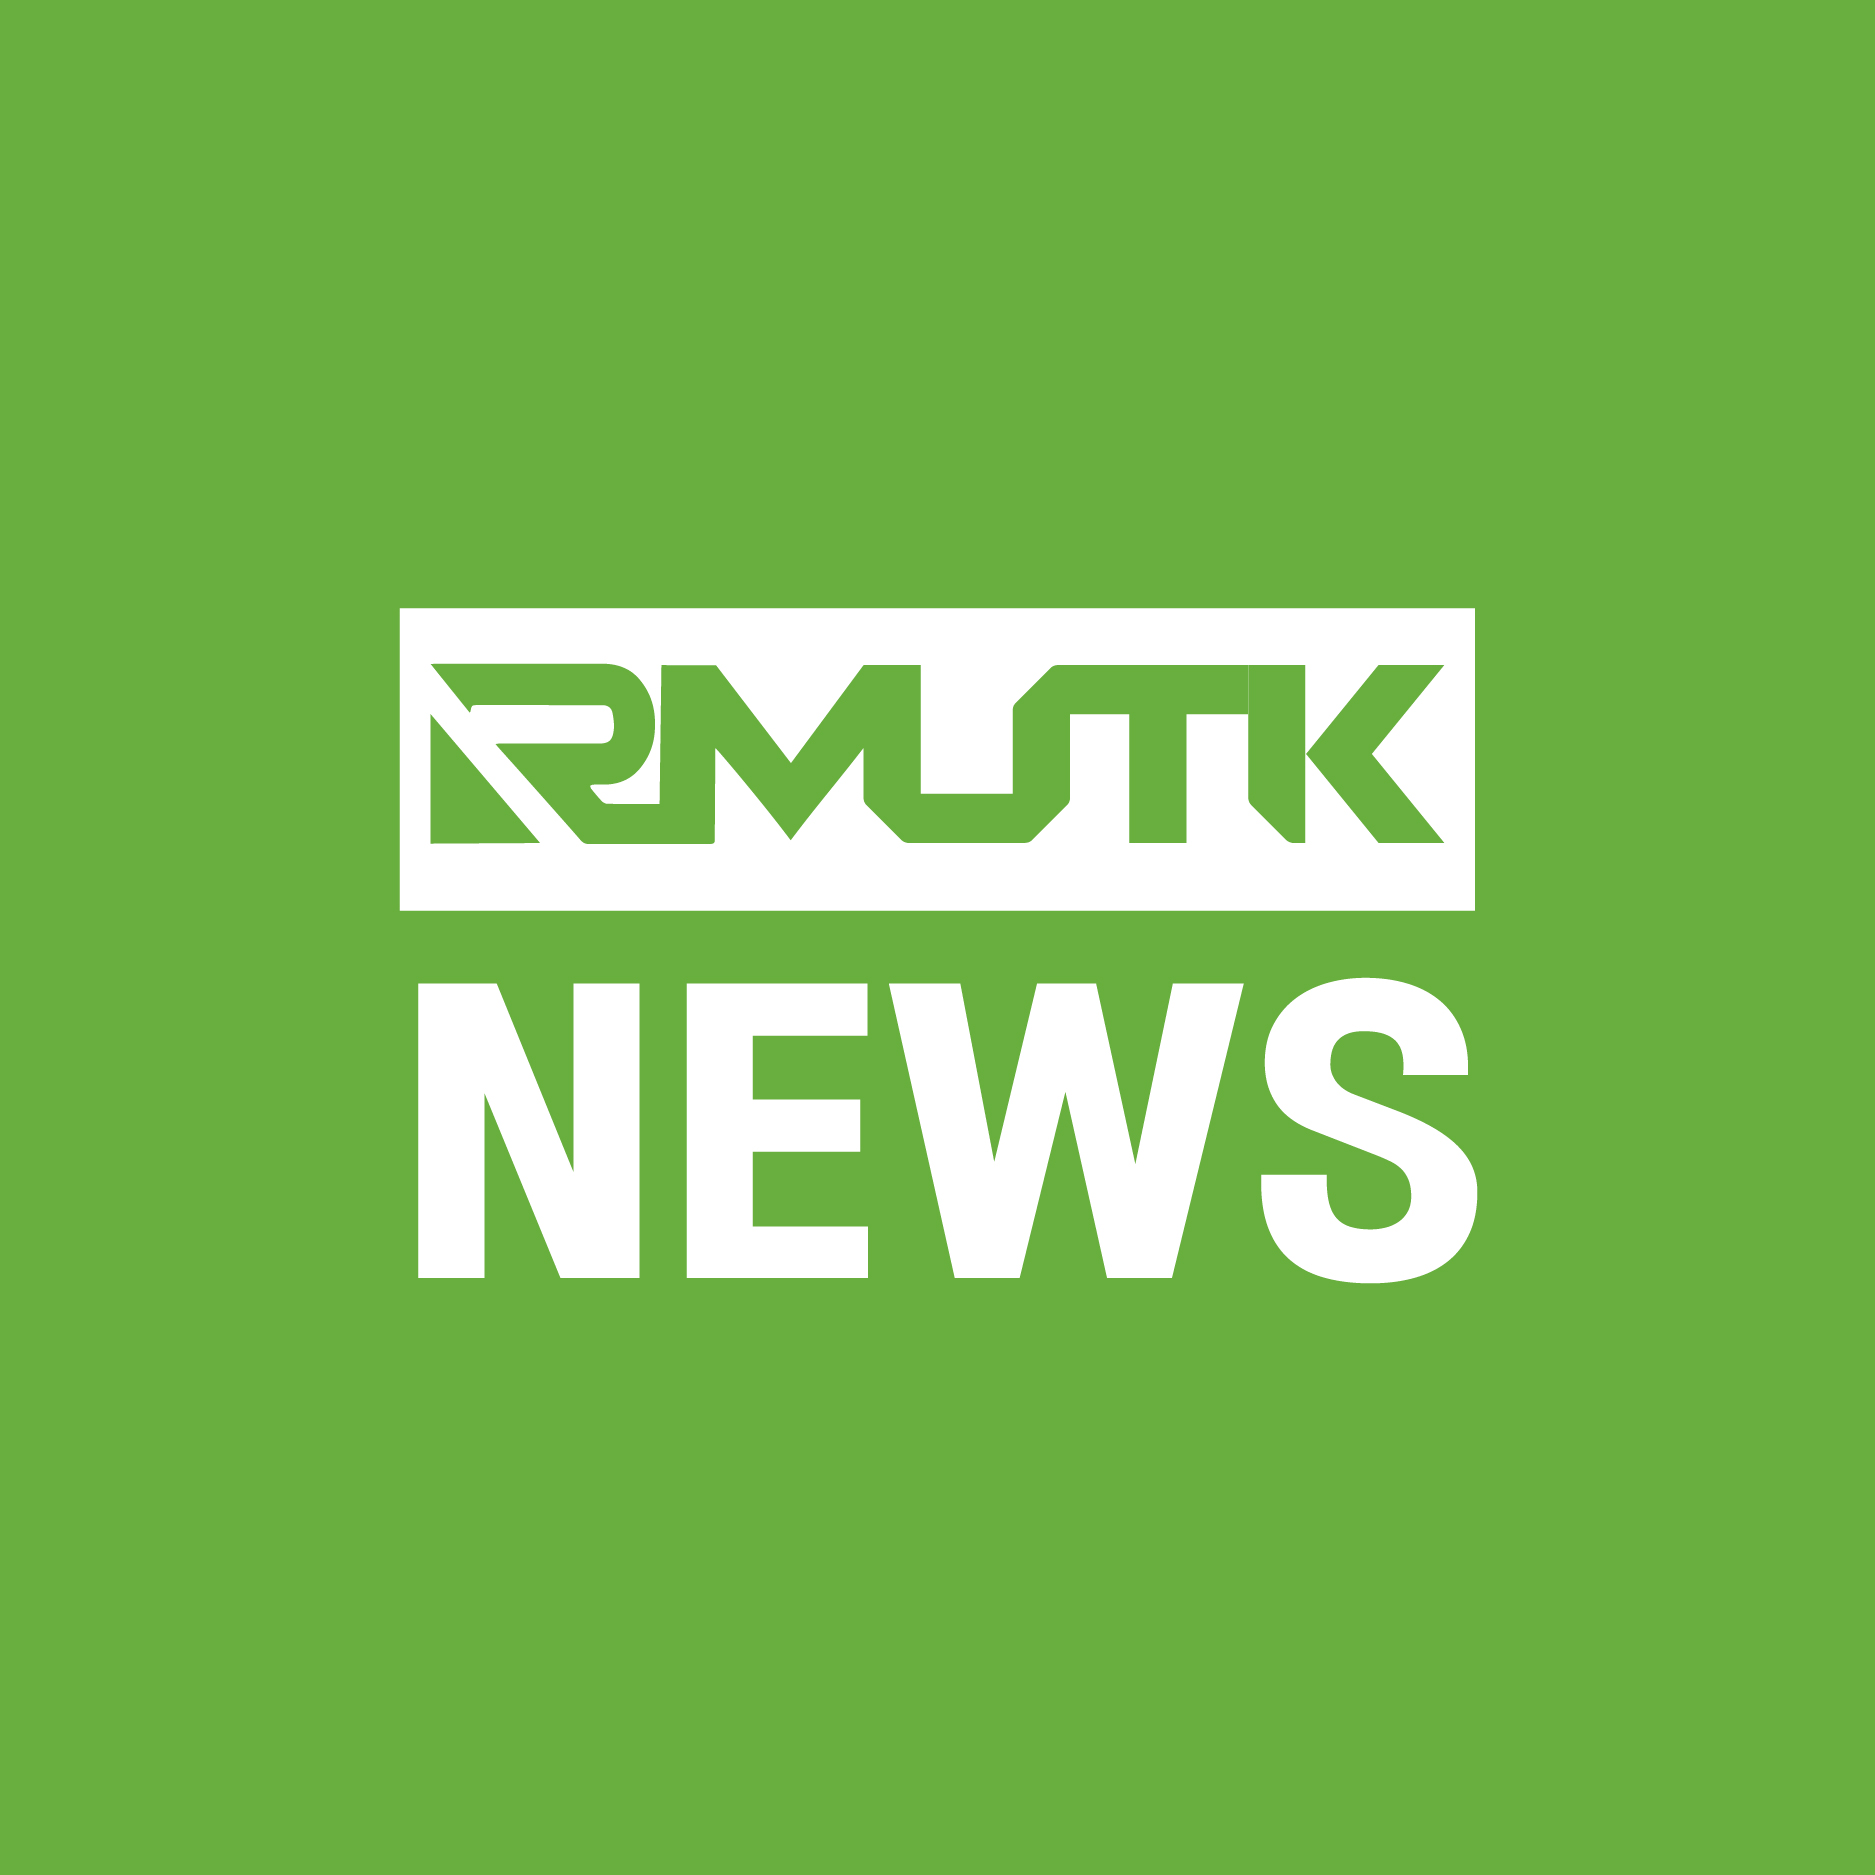 RMUTK_NEWS-01